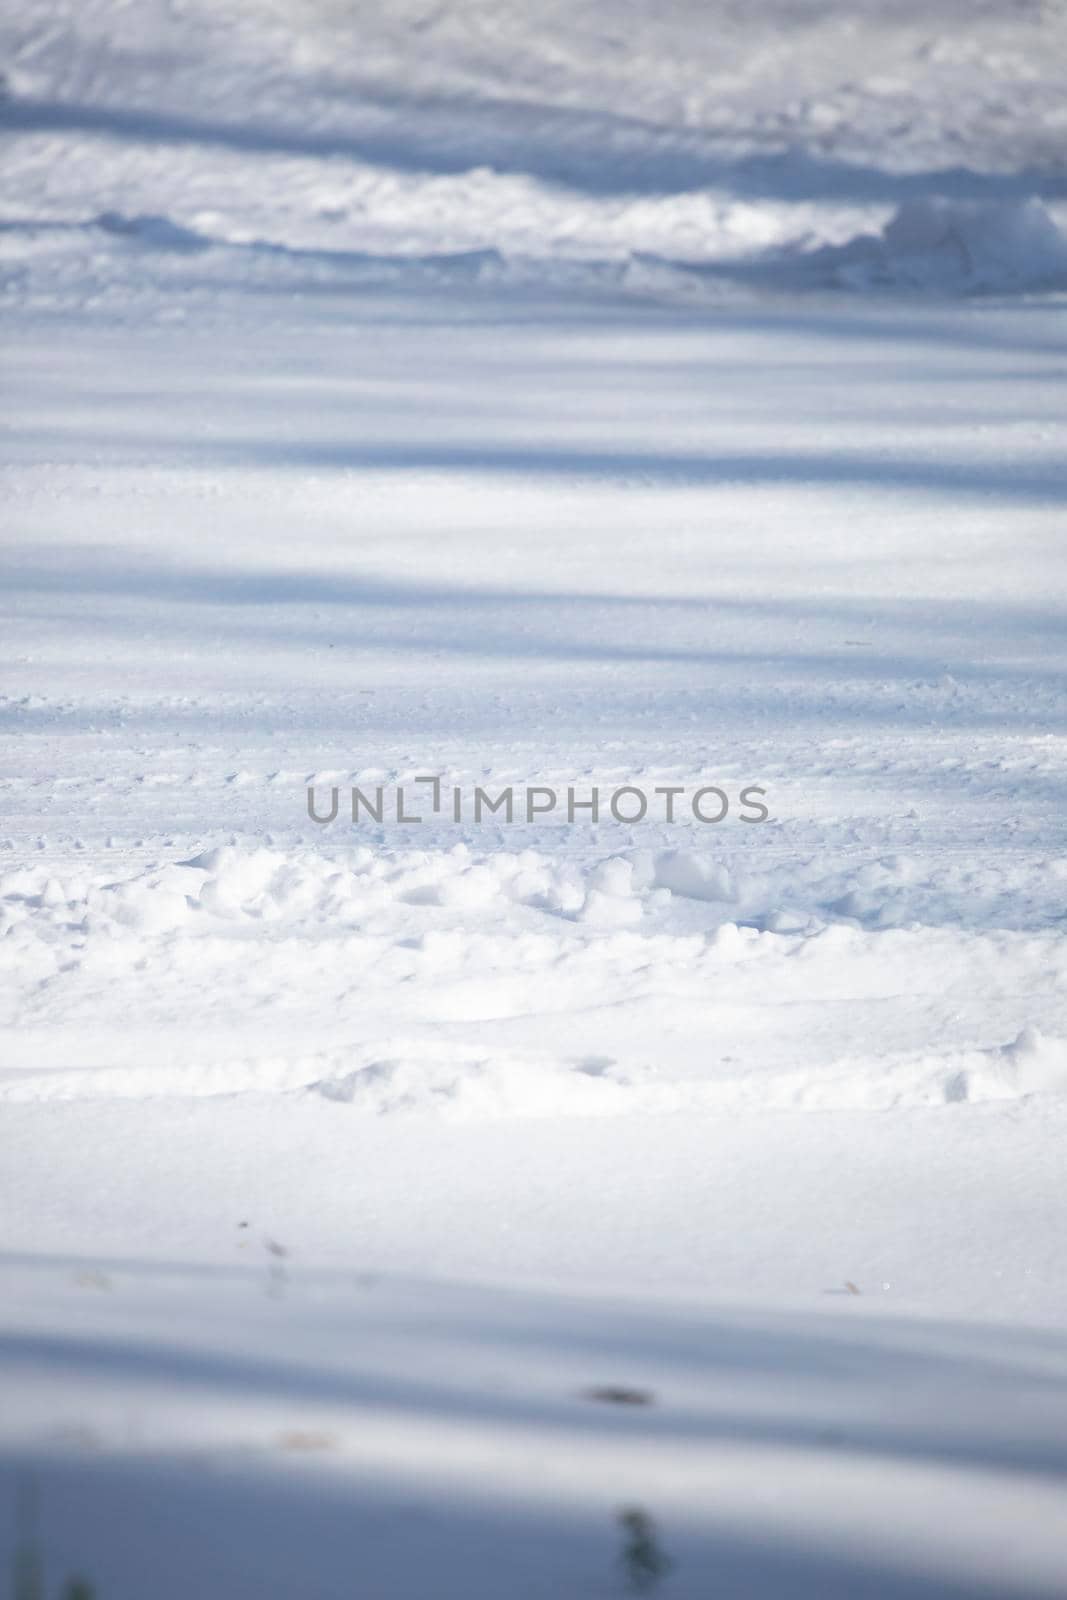 Tire Tracks in the Snow by tornado98